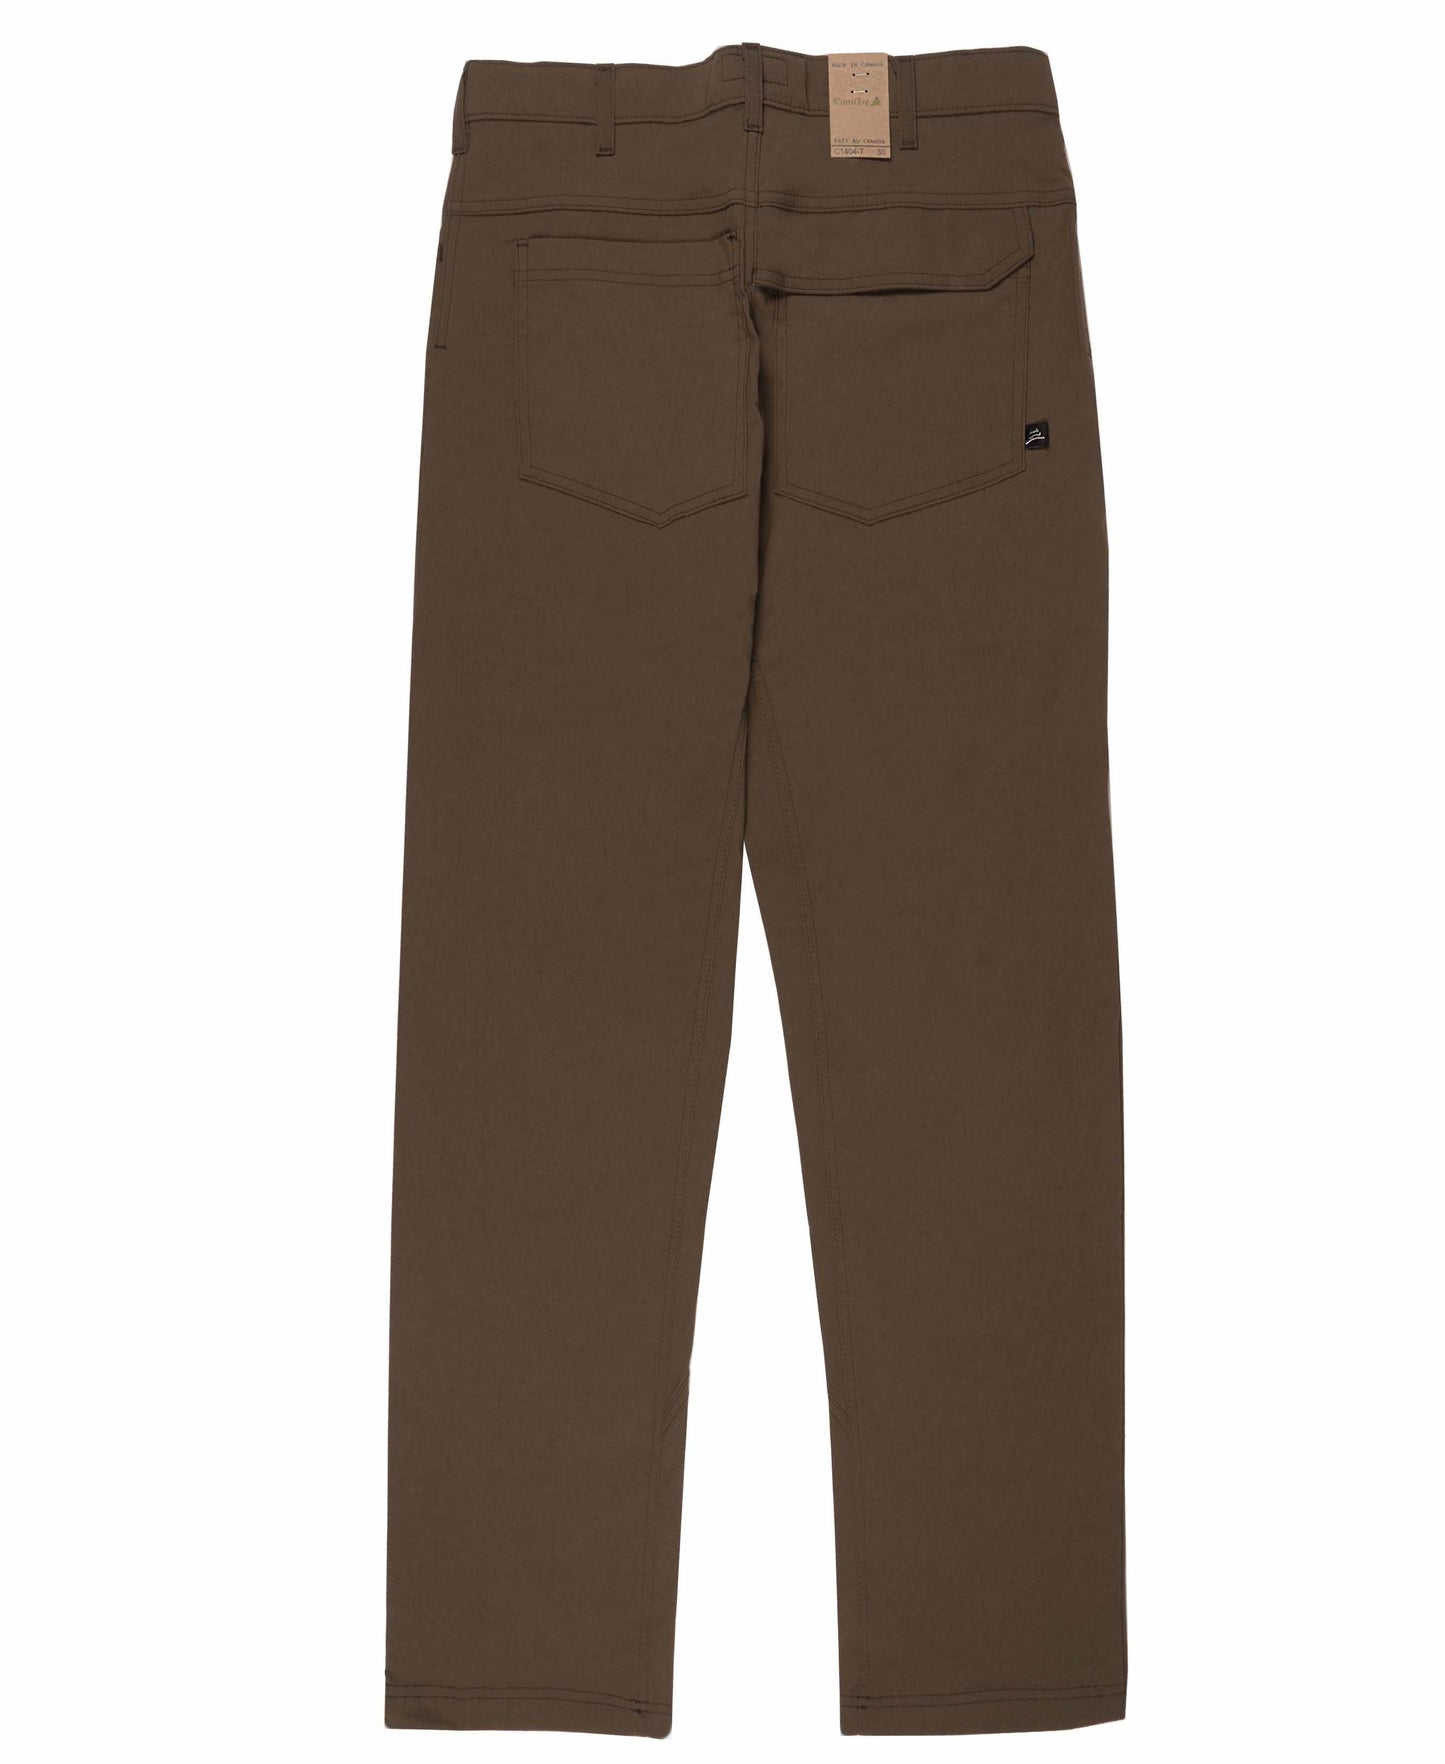 Plein Air Pantalon Taupe - Outdoor Taupe Pants